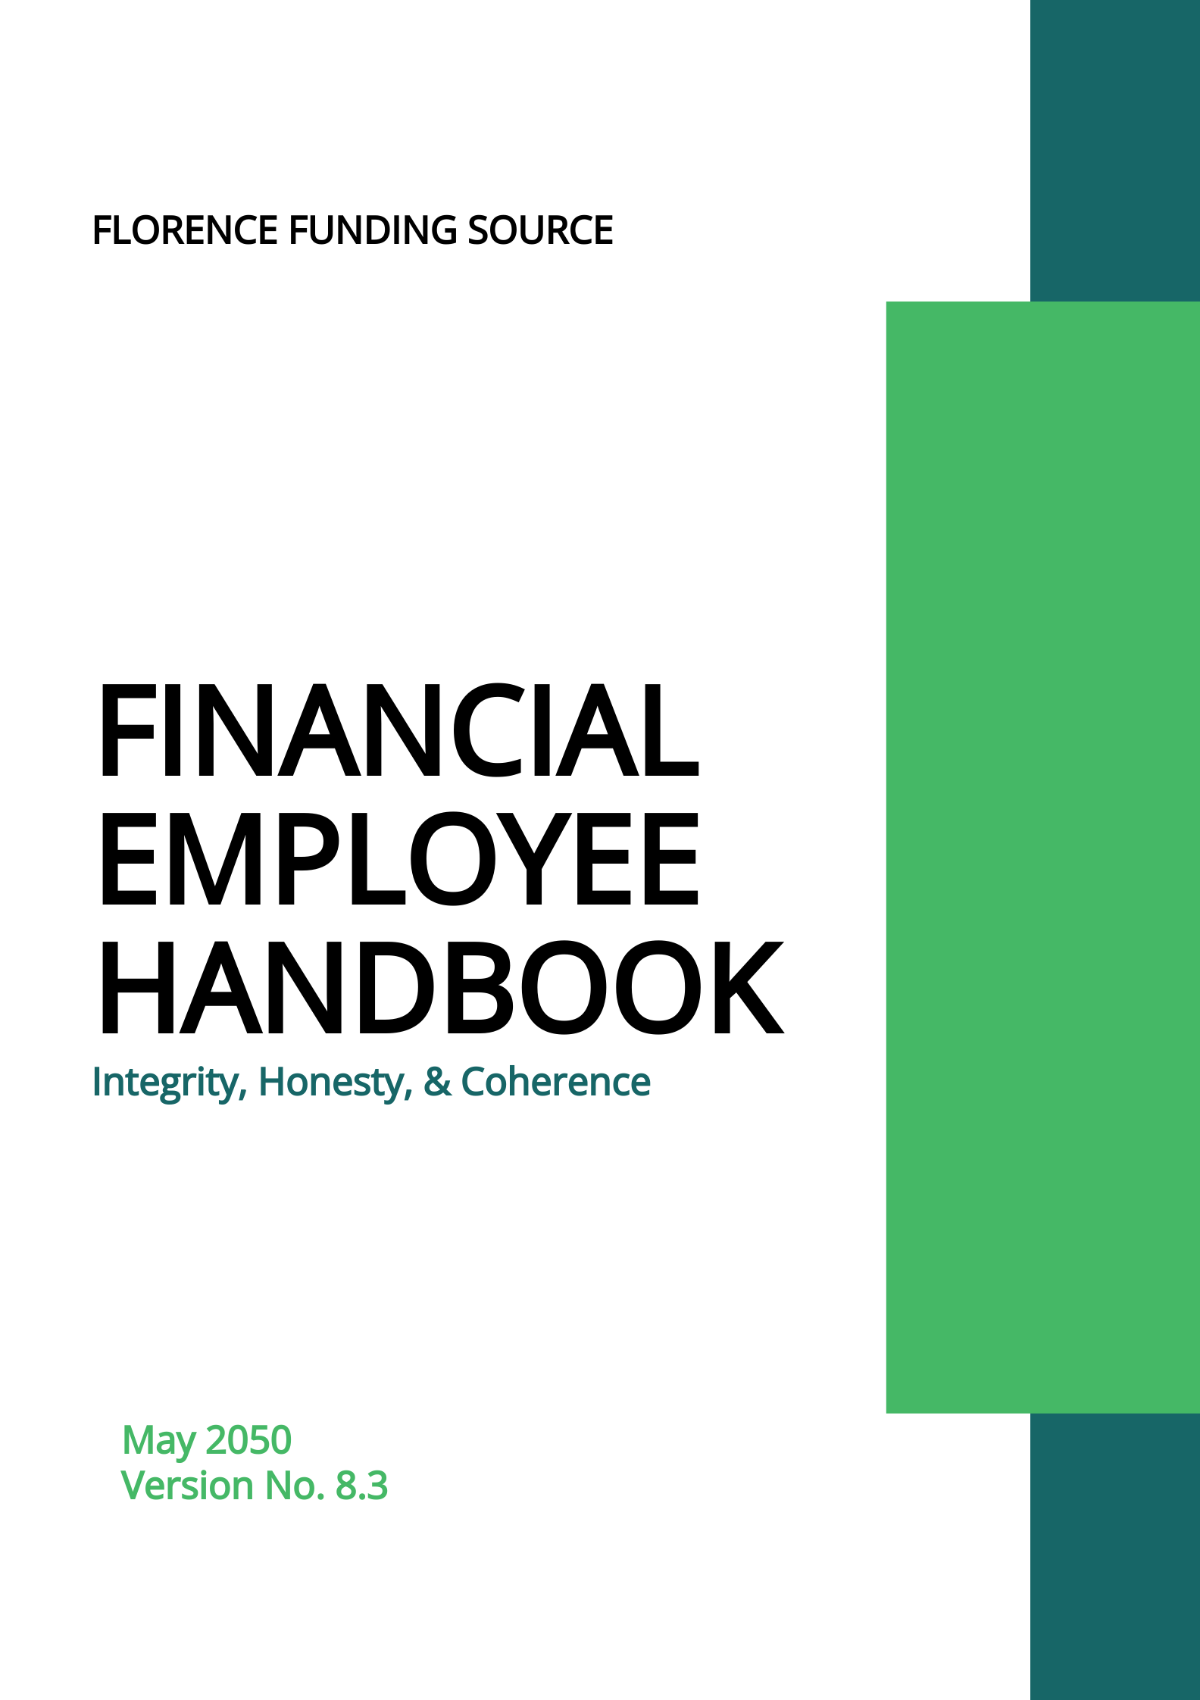 Free Financial Employee Handbook Template